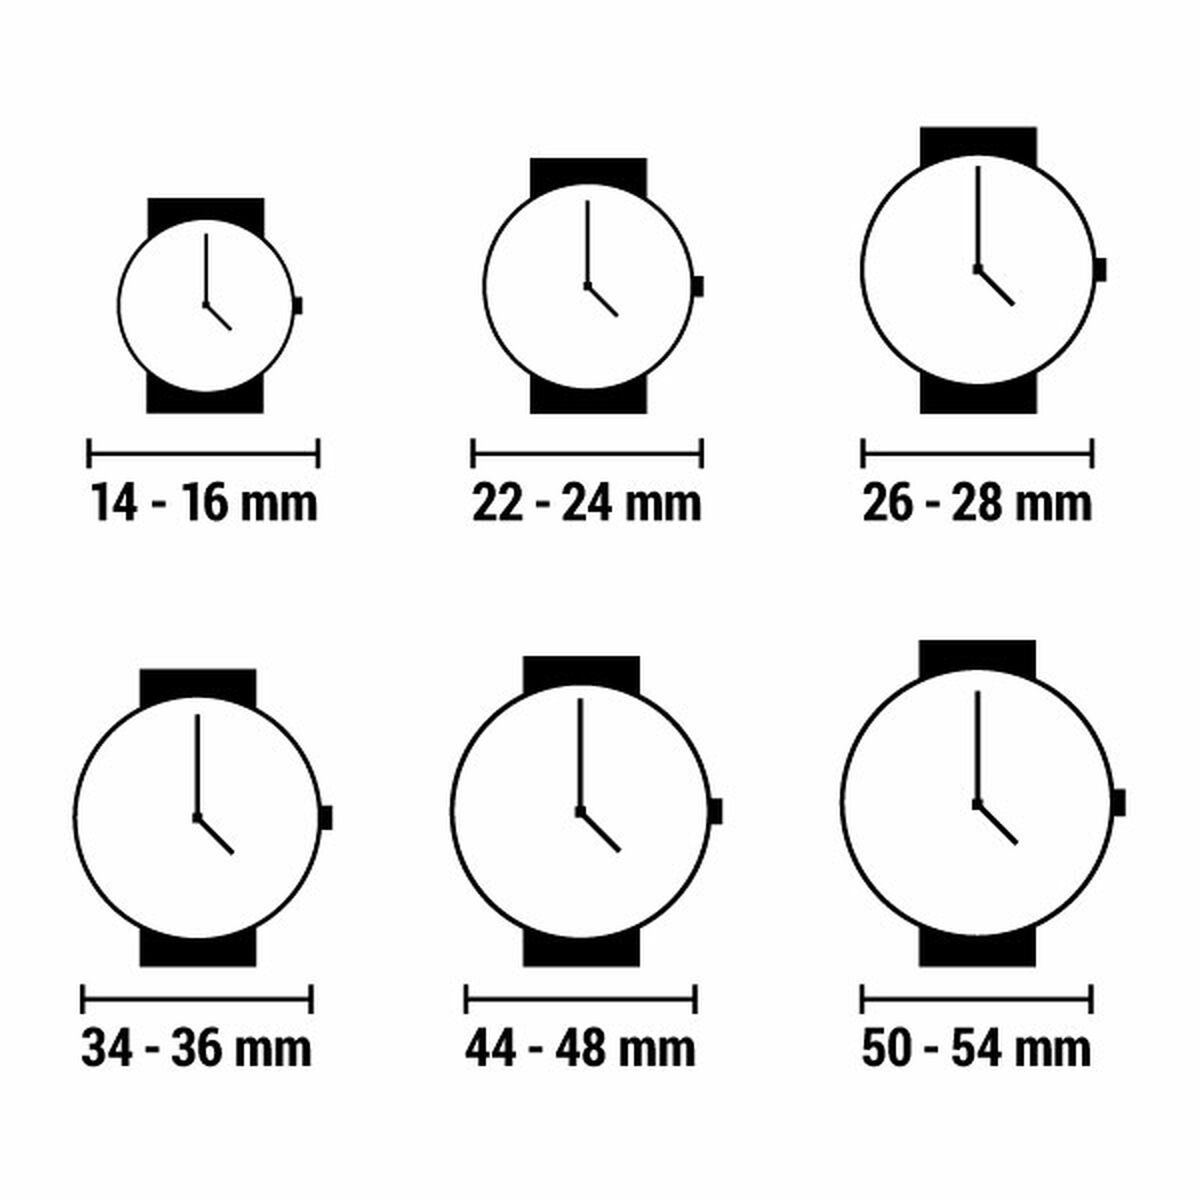 Horloge Dames CO88 Collection 8CW-10072